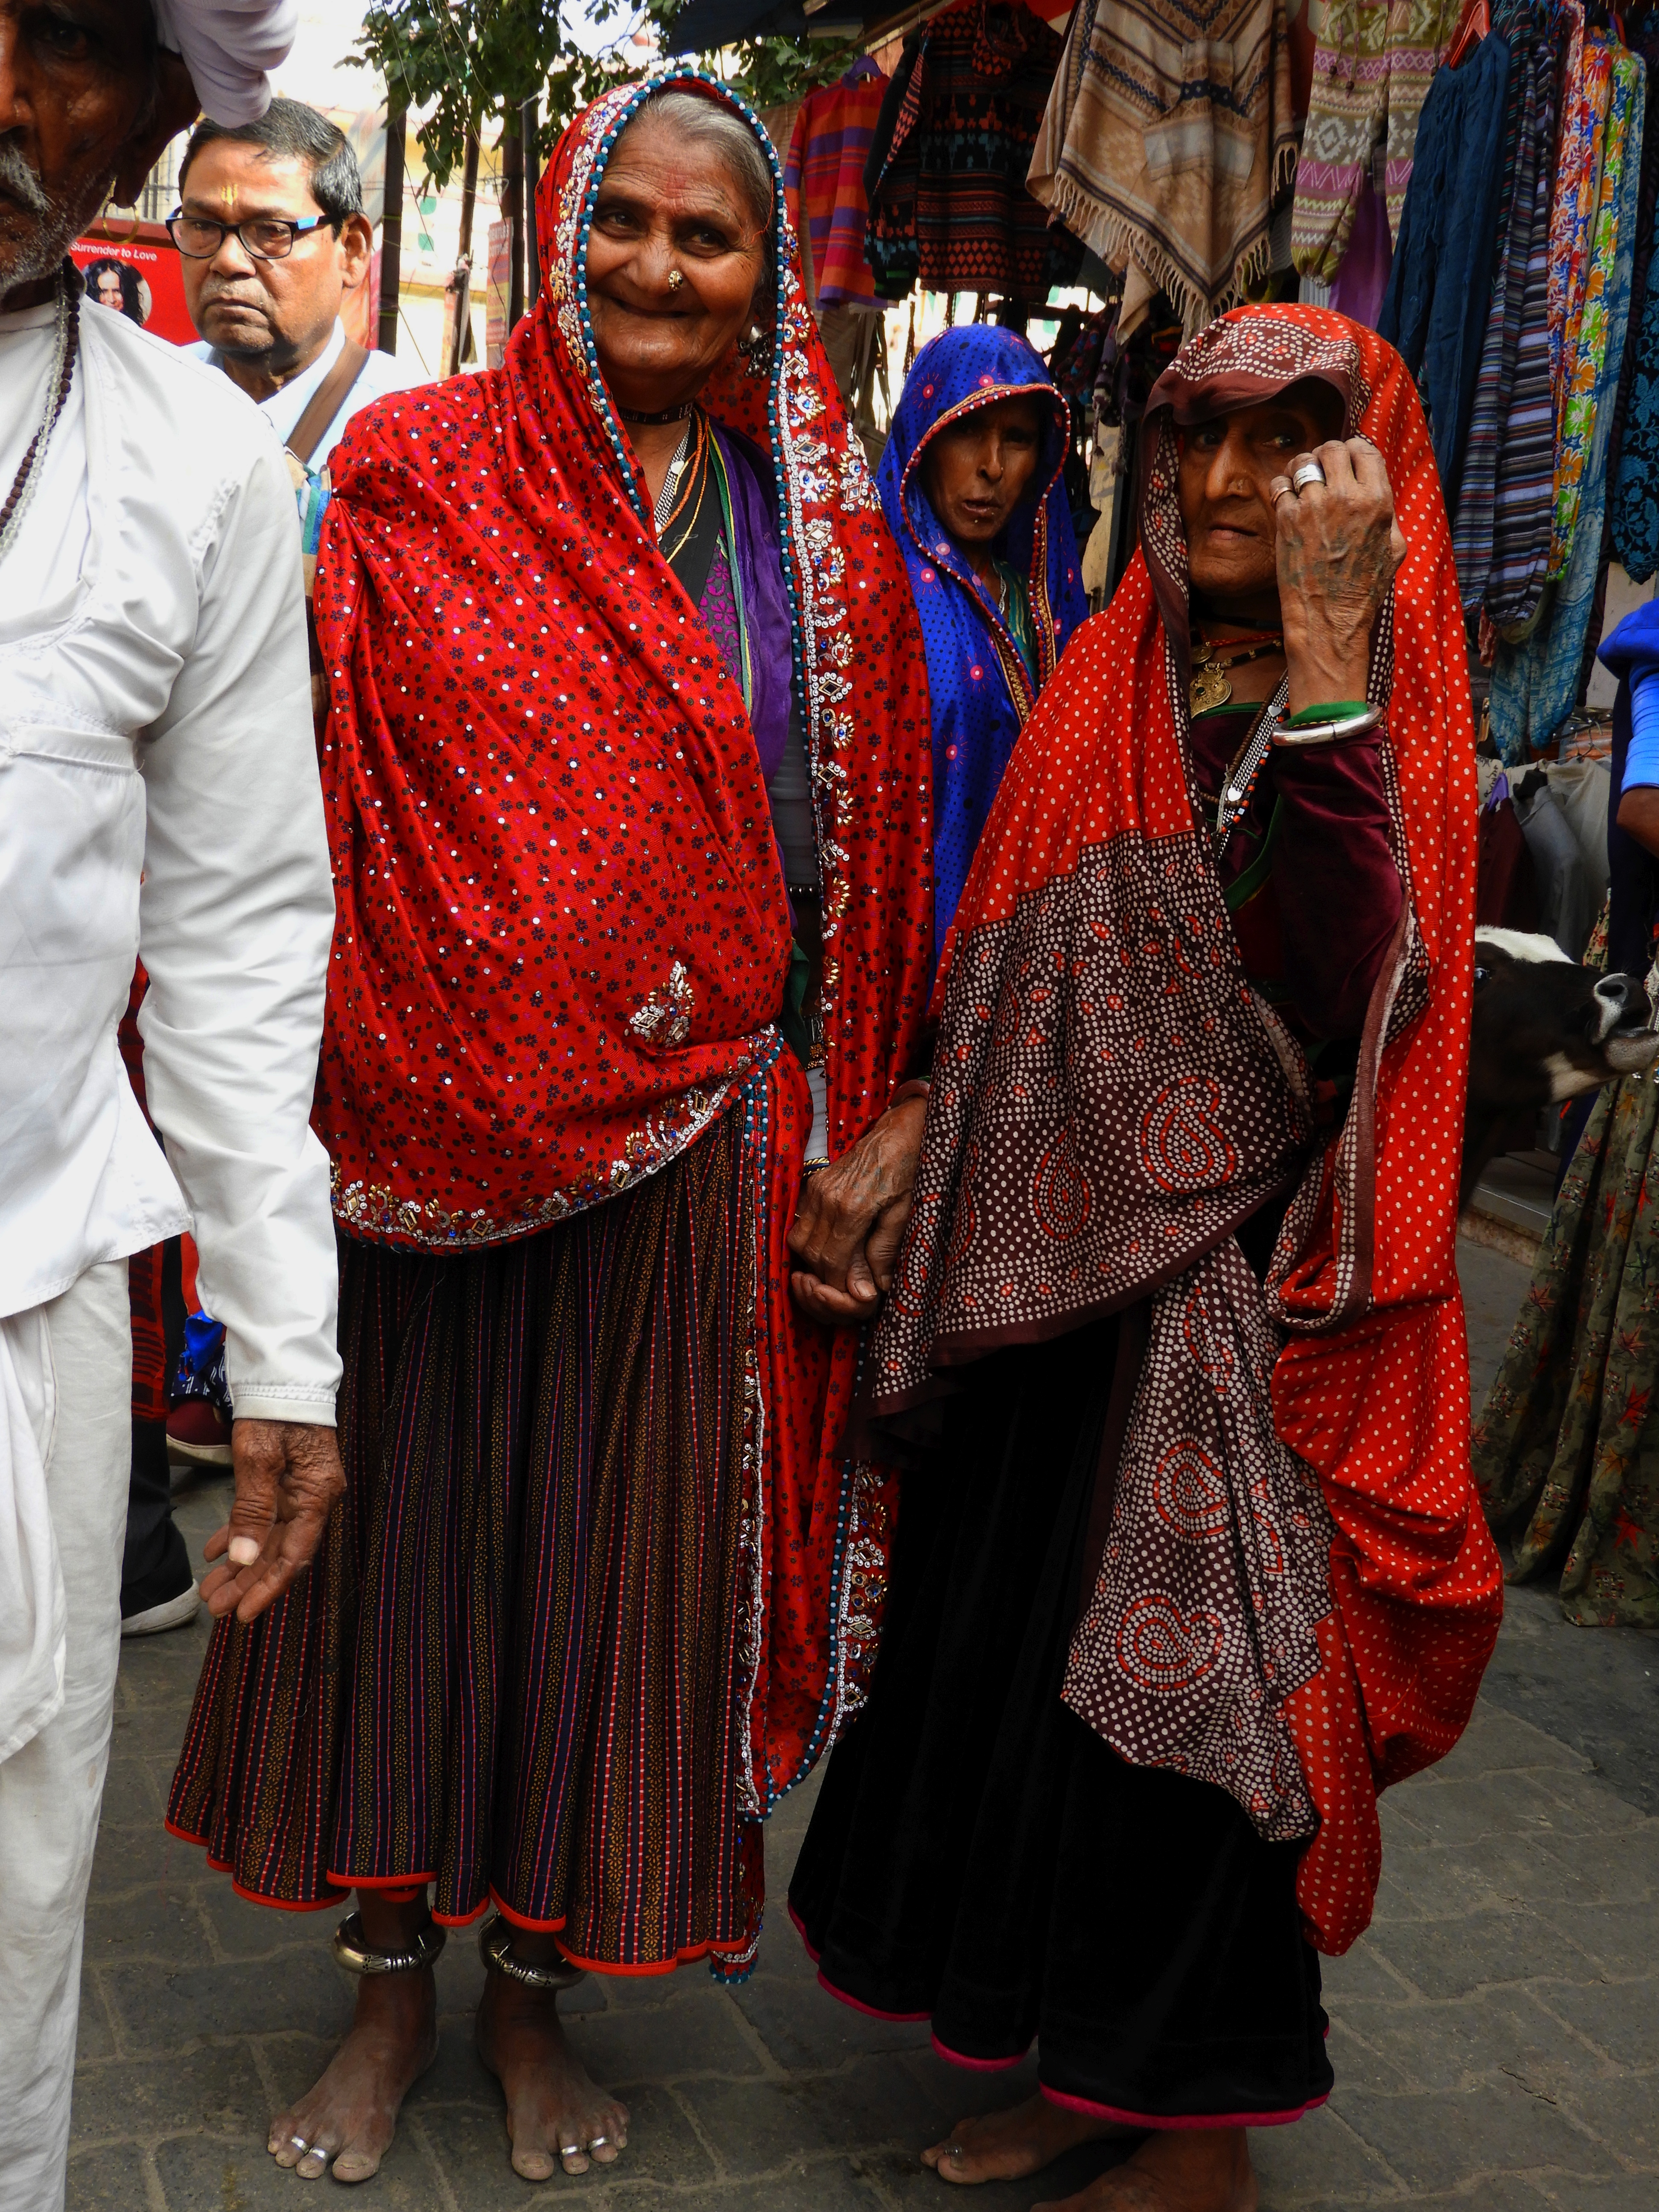 Rent or Buy Gujarat Folk Fancy Dress Costume for Boys Online in India